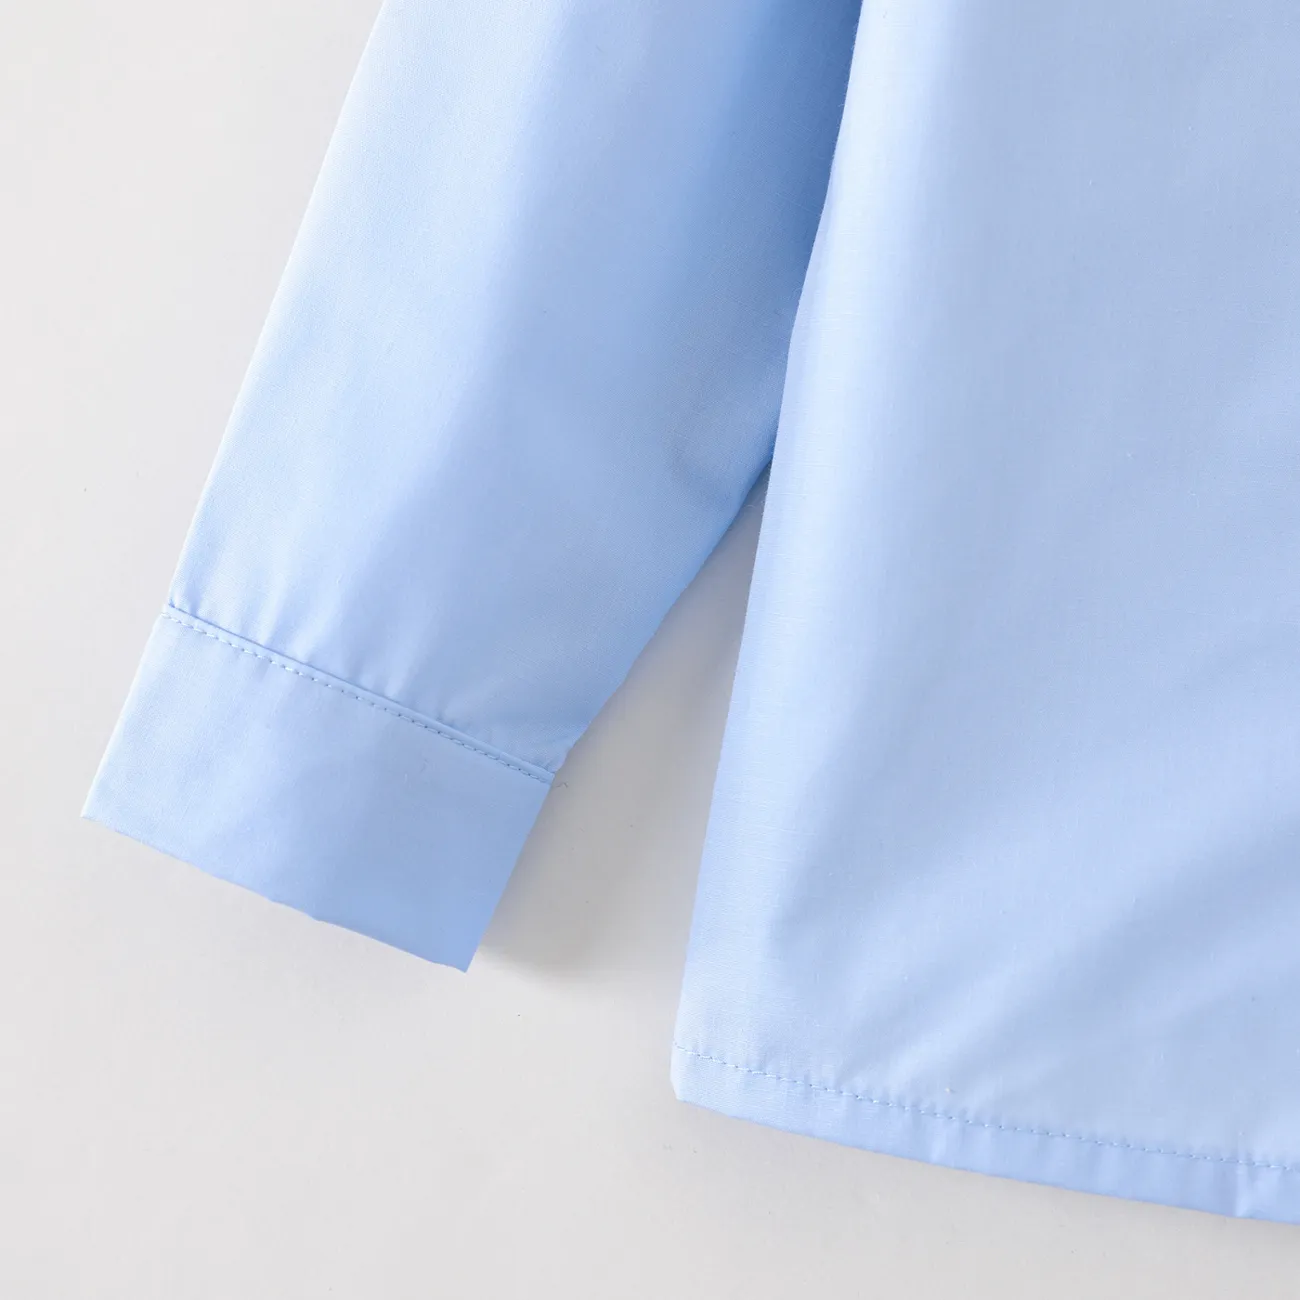 Niño pequeño / niña Uniforme escolar de manga larga Camisa sólida Azul big image 1